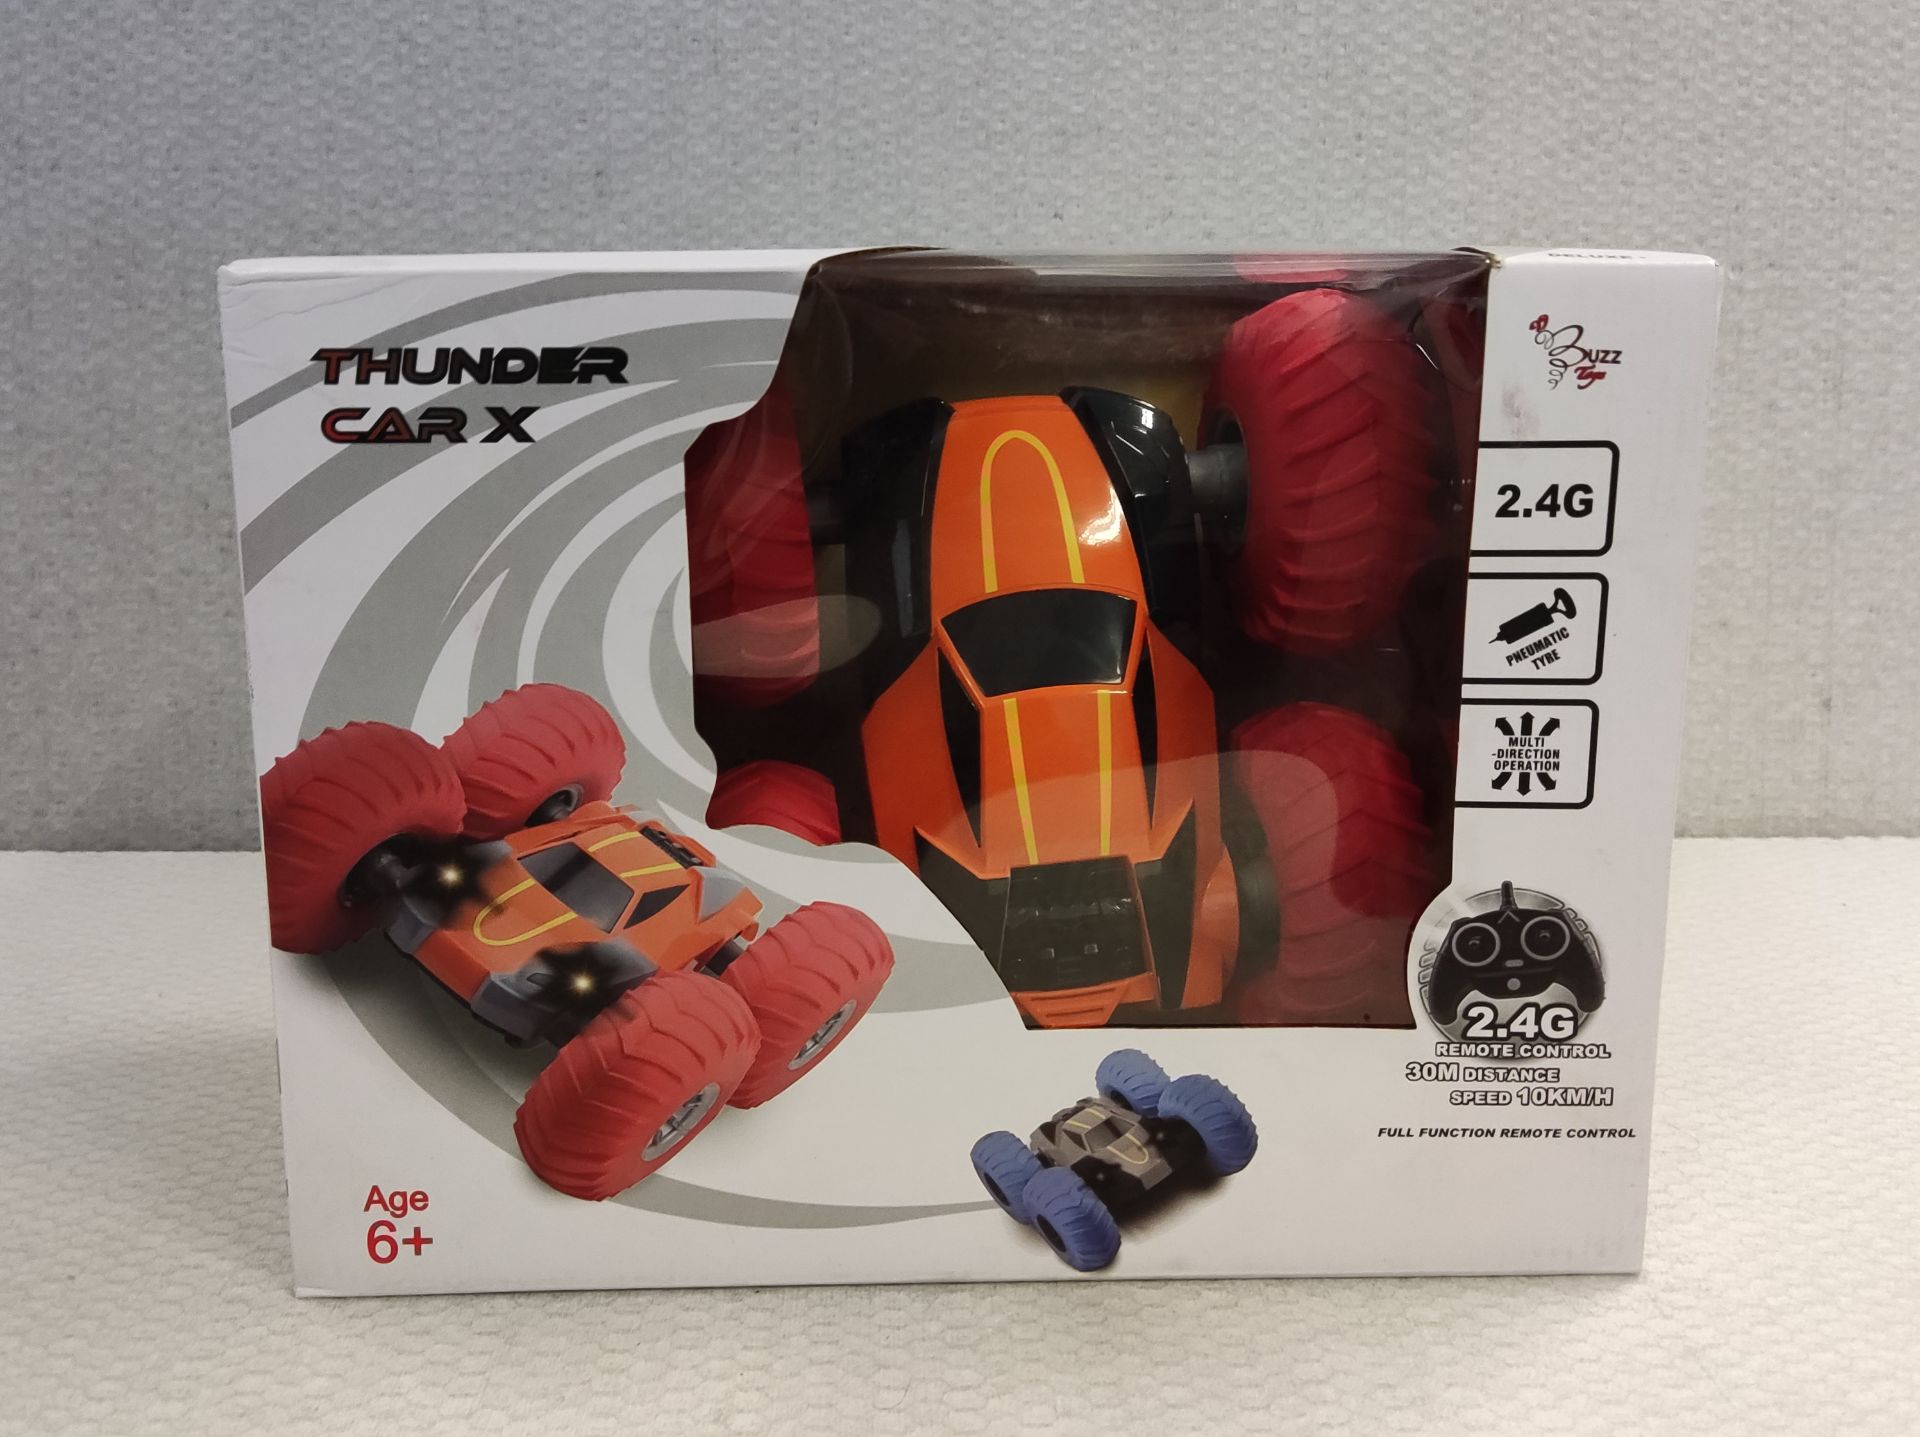 1 x Buzz Toys Thunder Car X R/C Vehicle in Orange - New/Boxed - Image 2 of 8